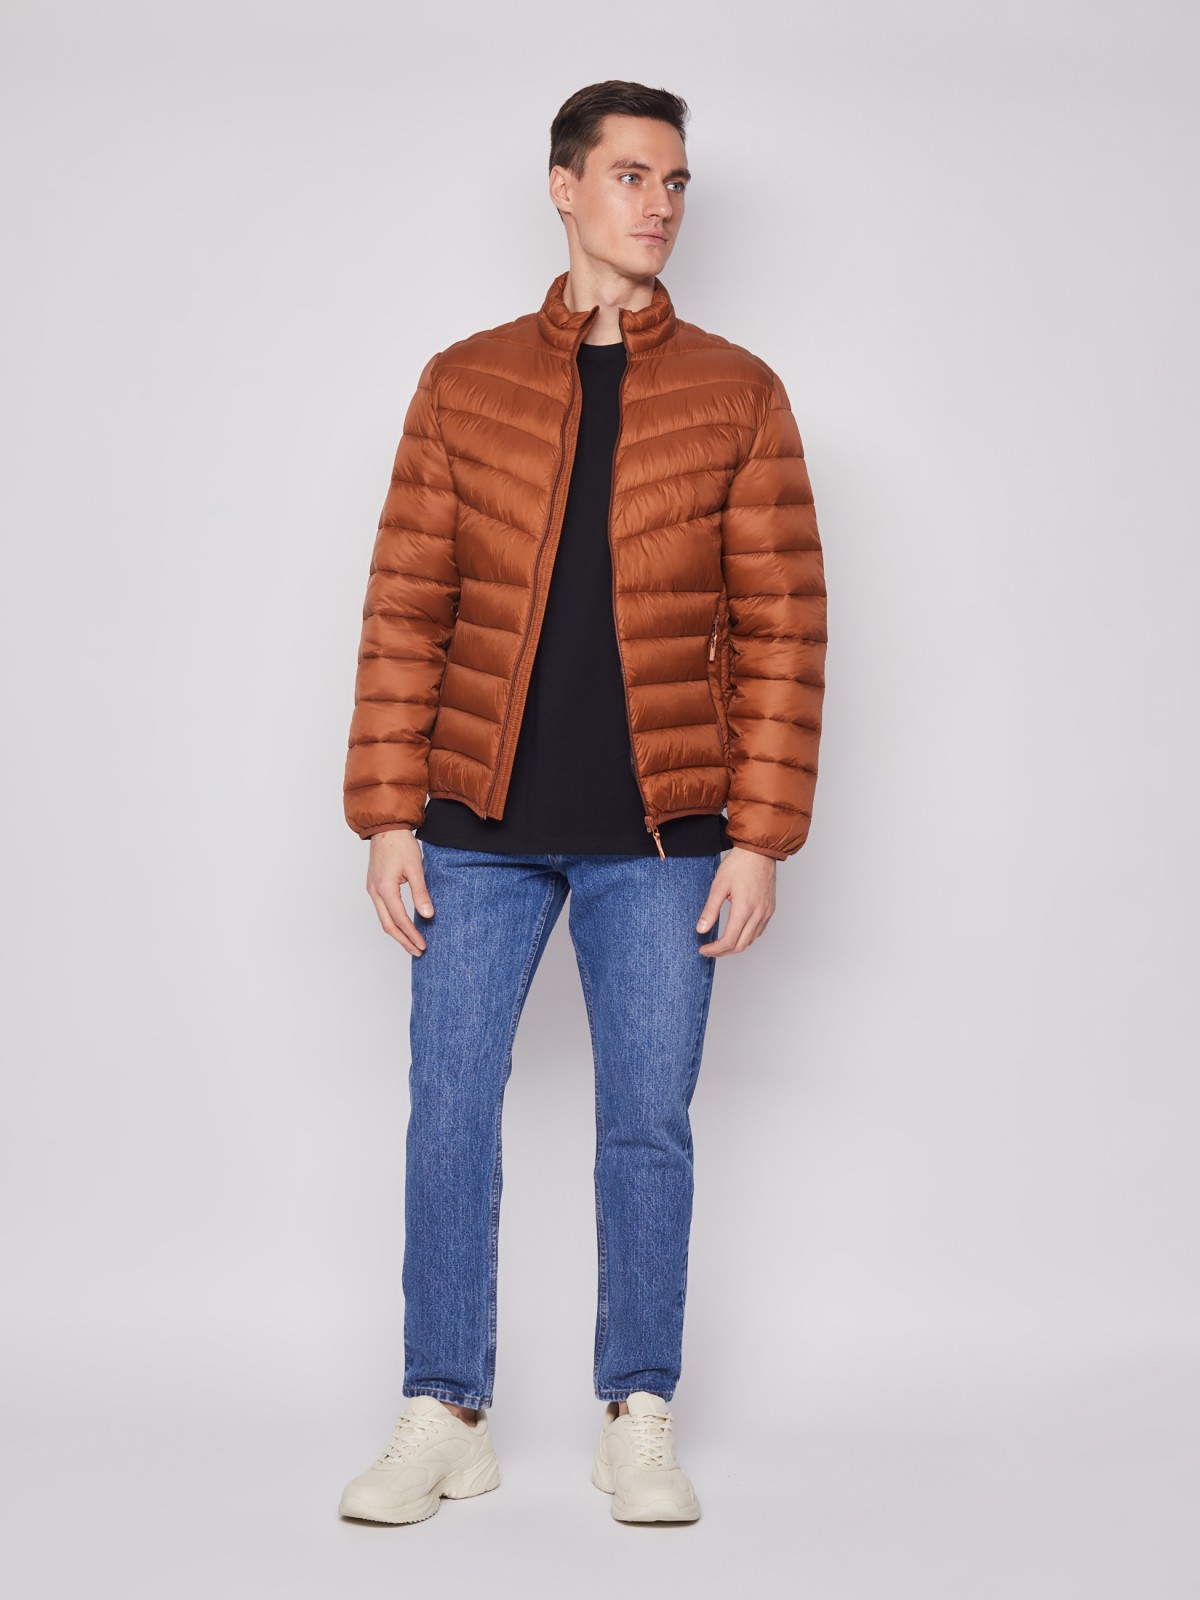 Утеплённая куртка с воротником zolla 012125102144, цвет терракота, размер S - фото 2